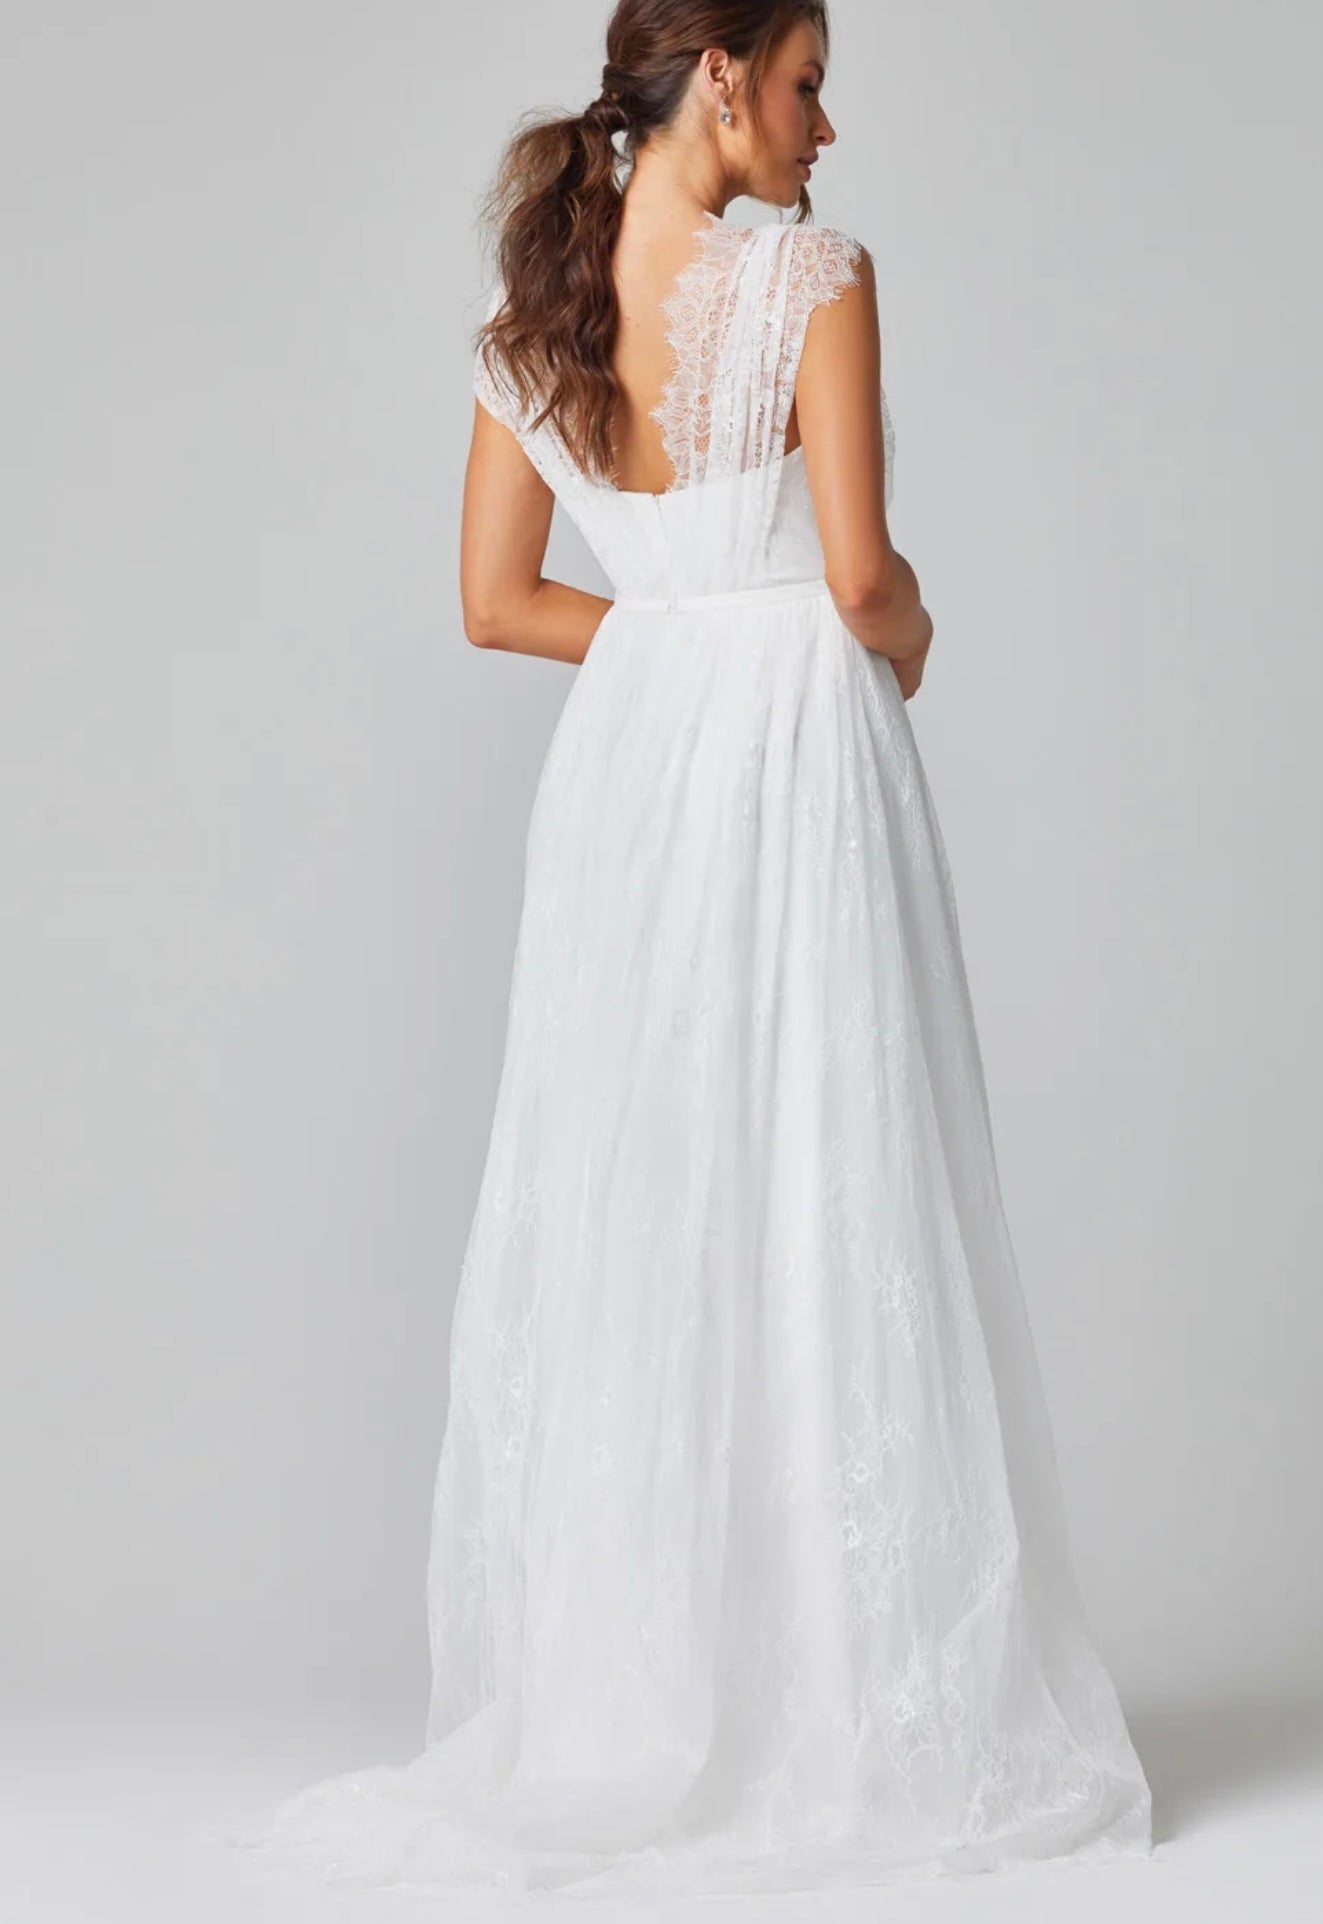 Melody vintage white wedding dress